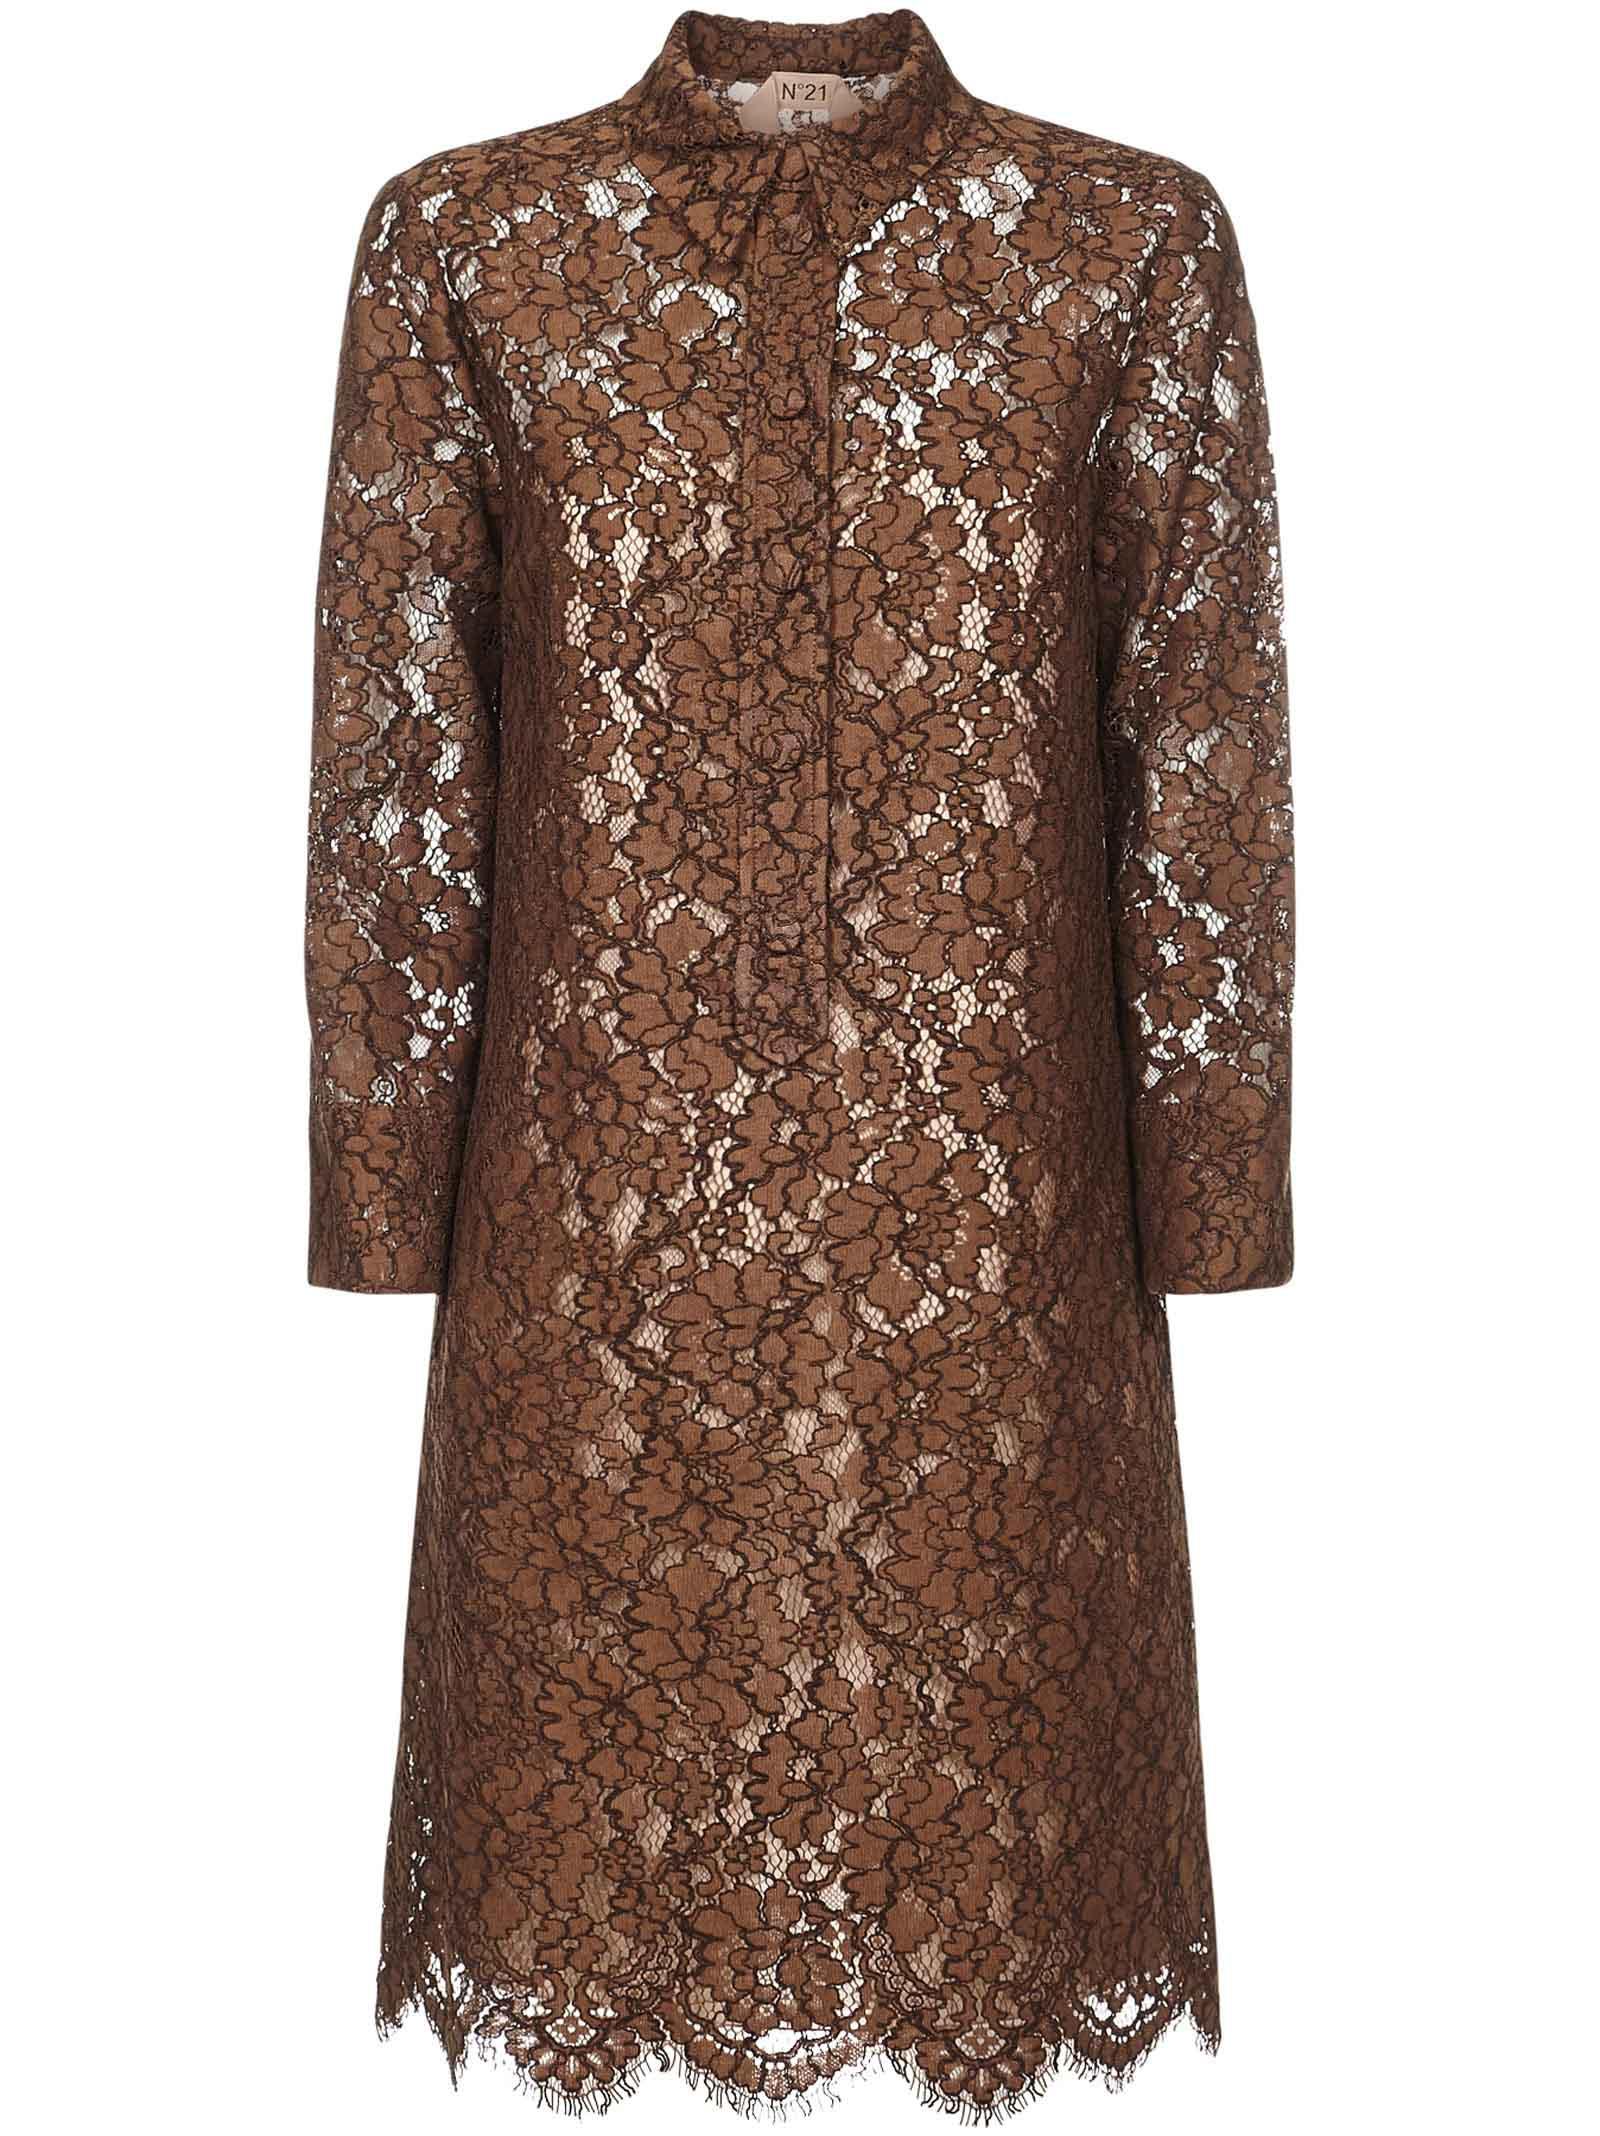 N°21 Lace Mini Dress in Brown - Lyst